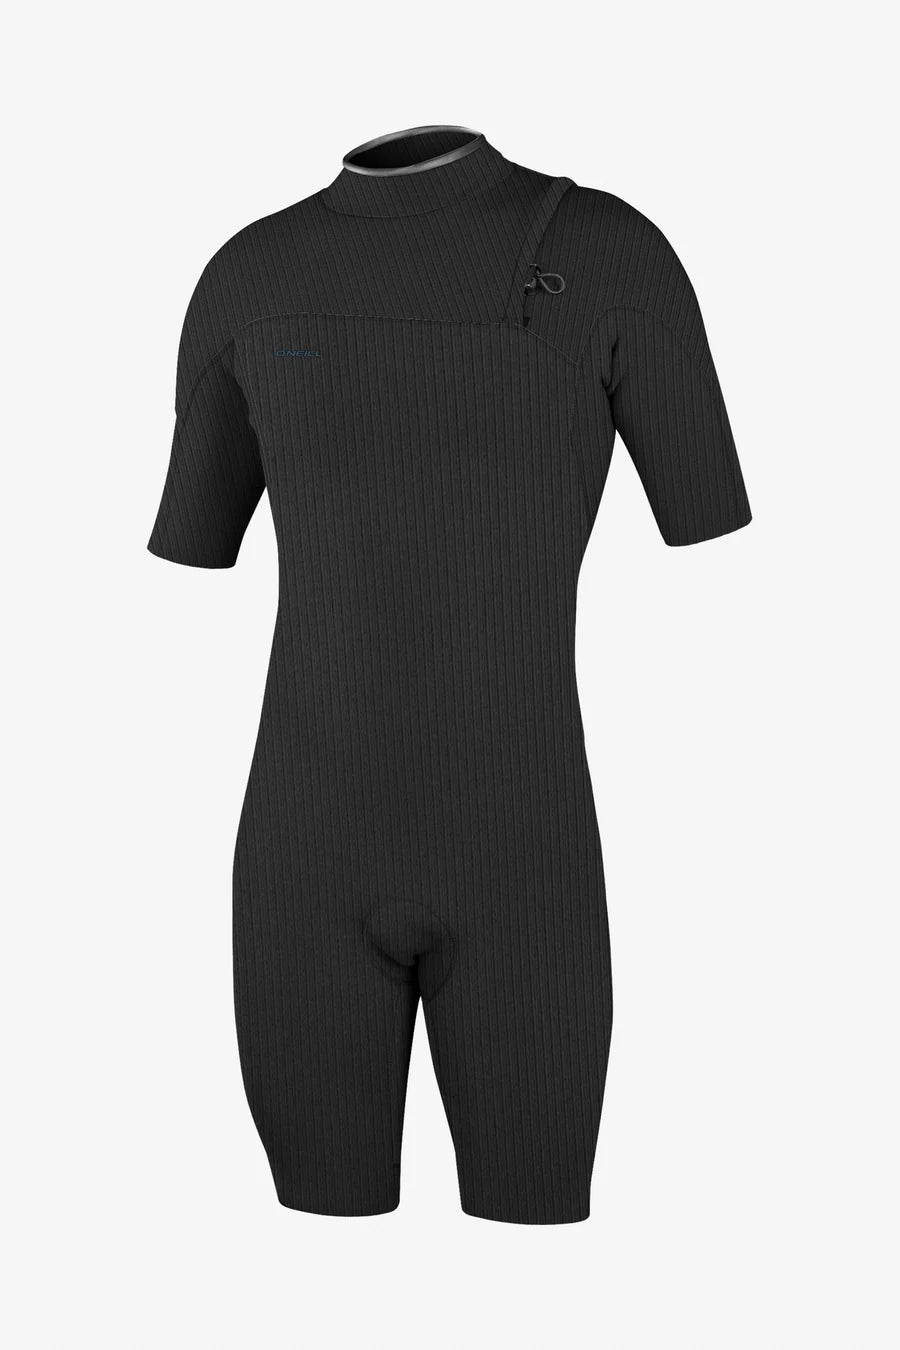 O'Neill Men's Hyperfreak Comp-X 2+mm Zipless S/S Spring Suit